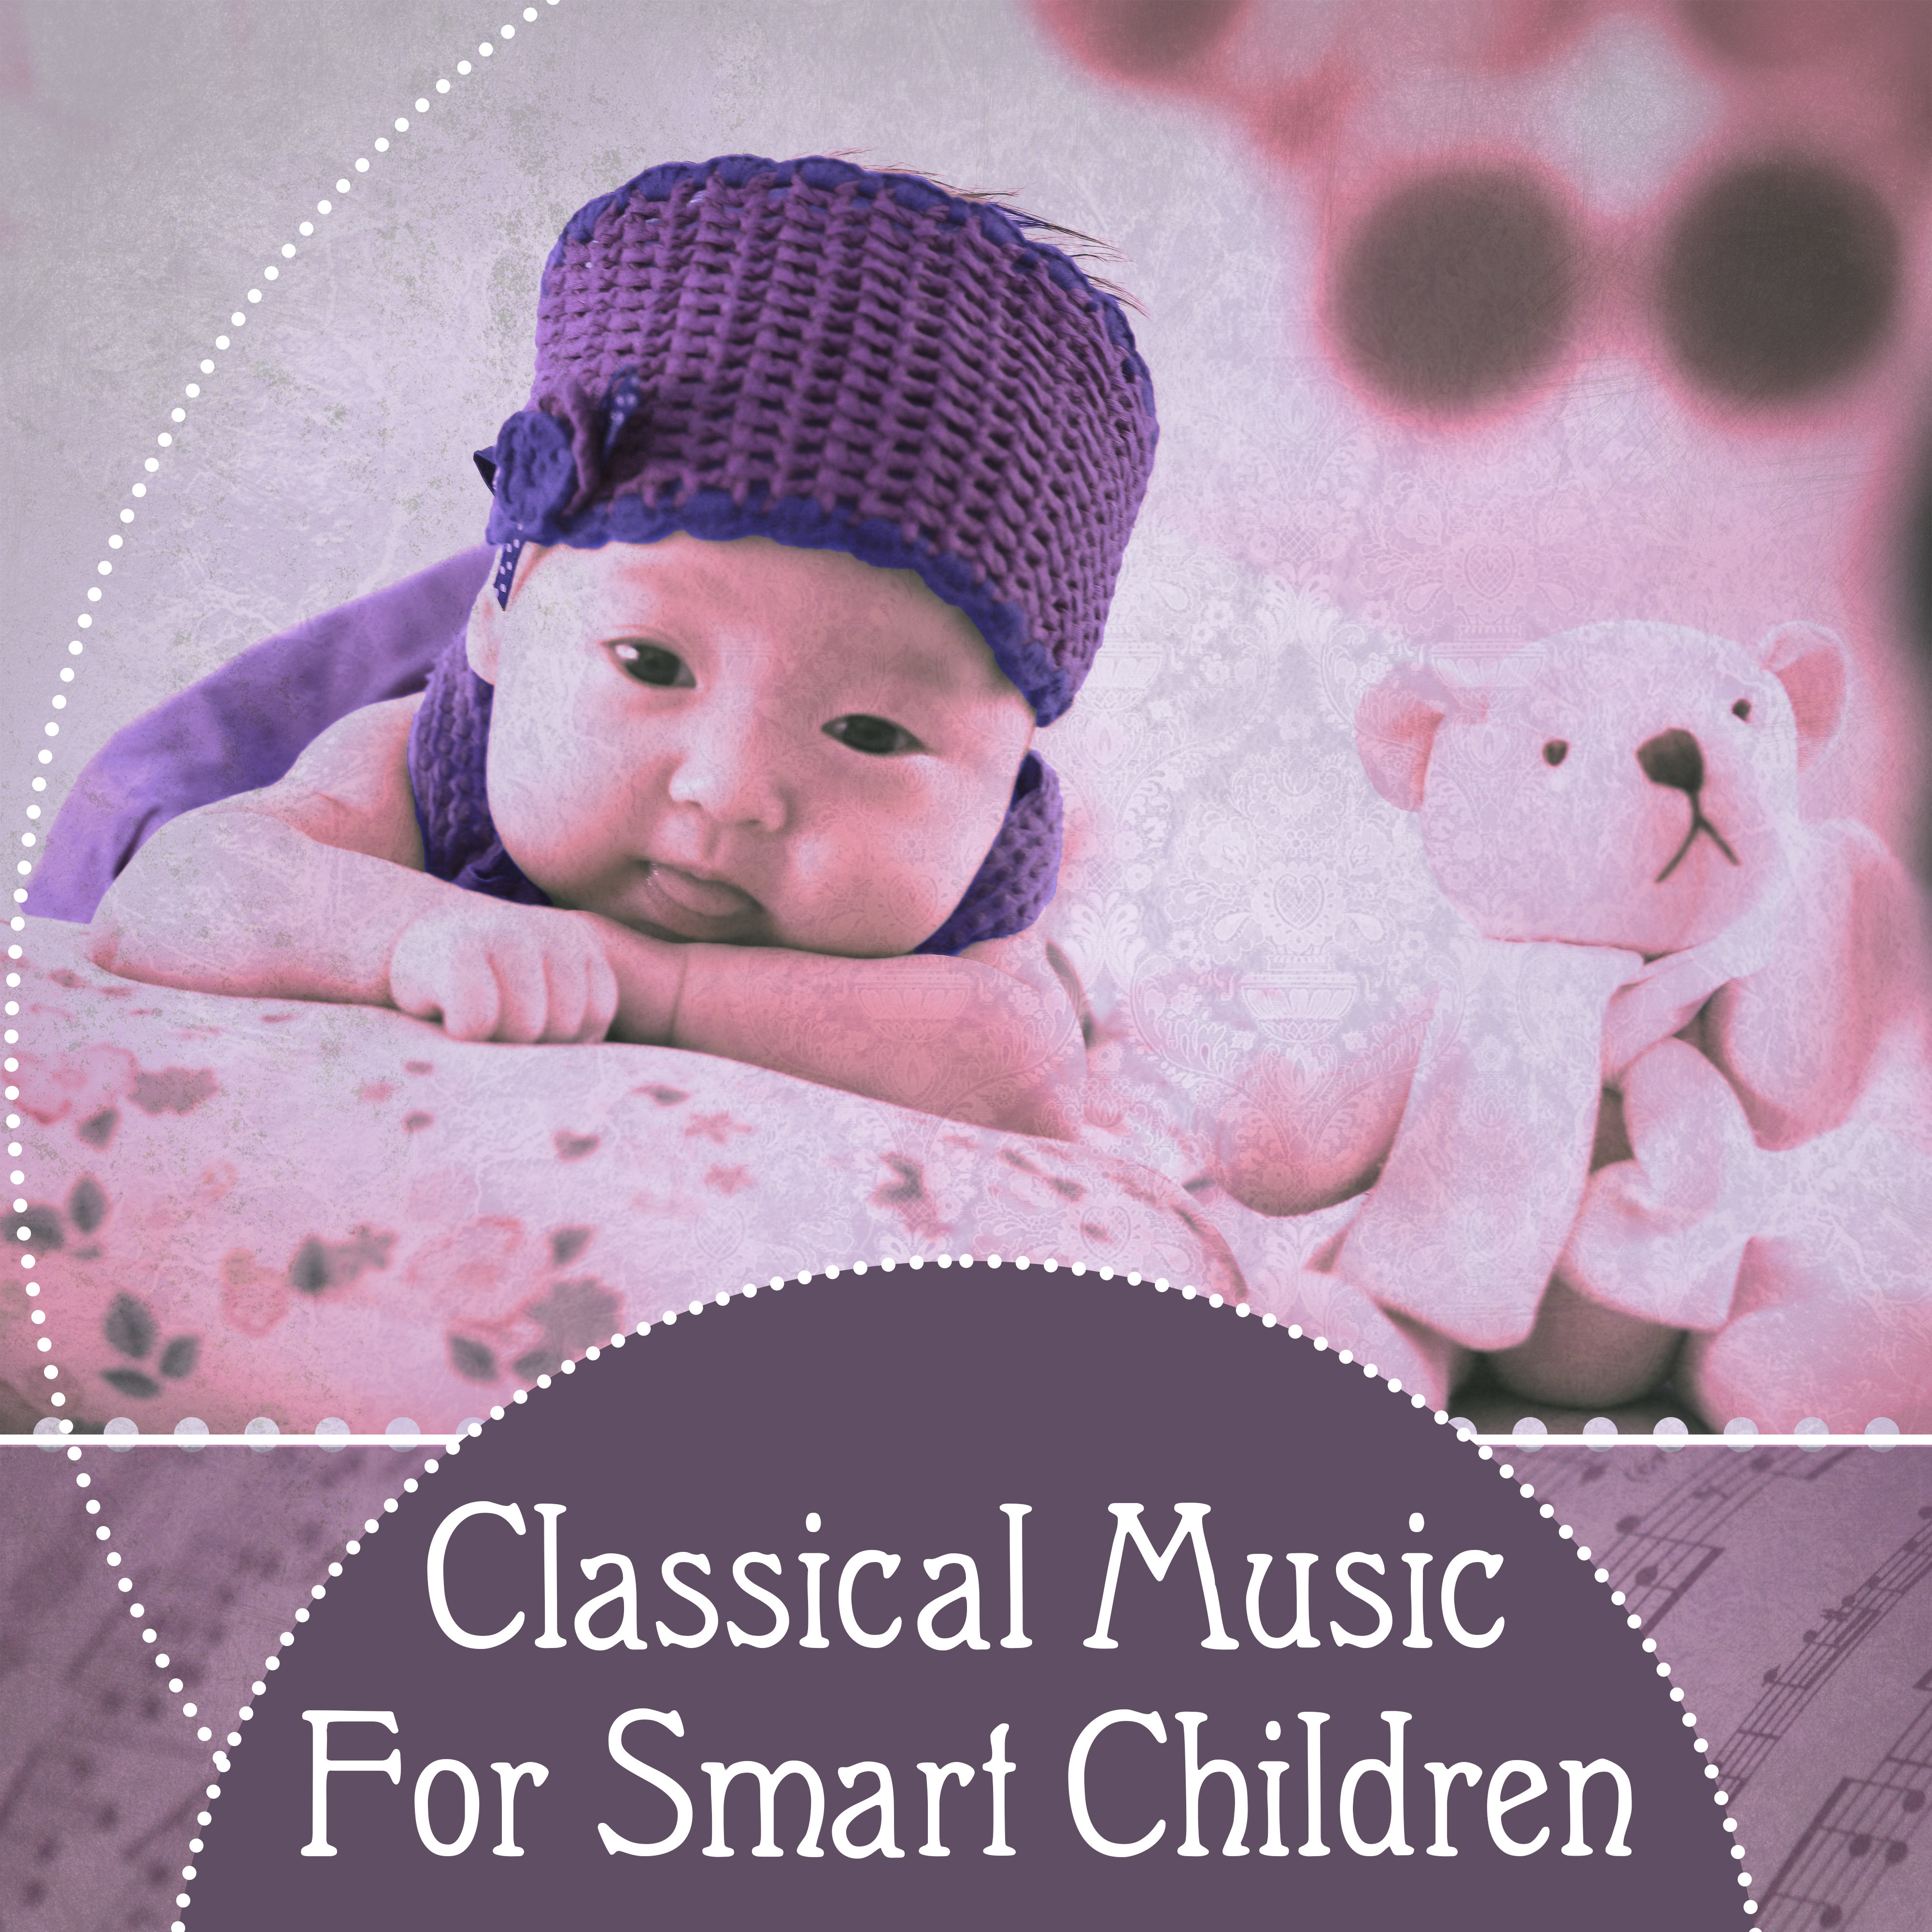 Classical Music For Smart Children – Classical Music for Babies to Stimulate Brain Development, Einstein Bright Effect